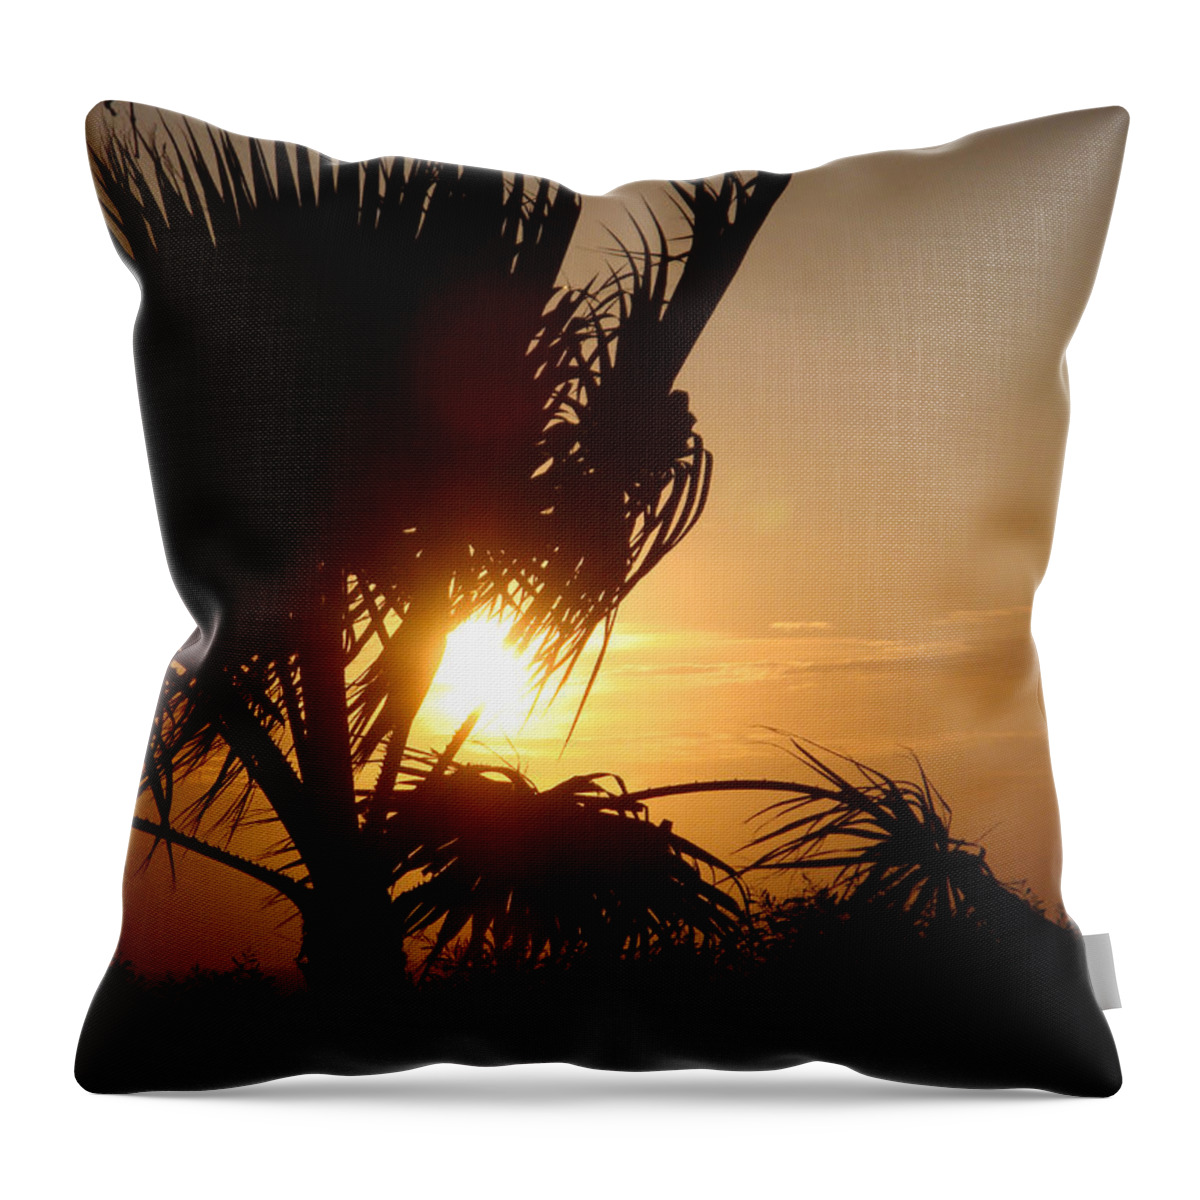 Sunset Throw Pillow featuring the digital art Silhouette Sunset by Sarah Vernon